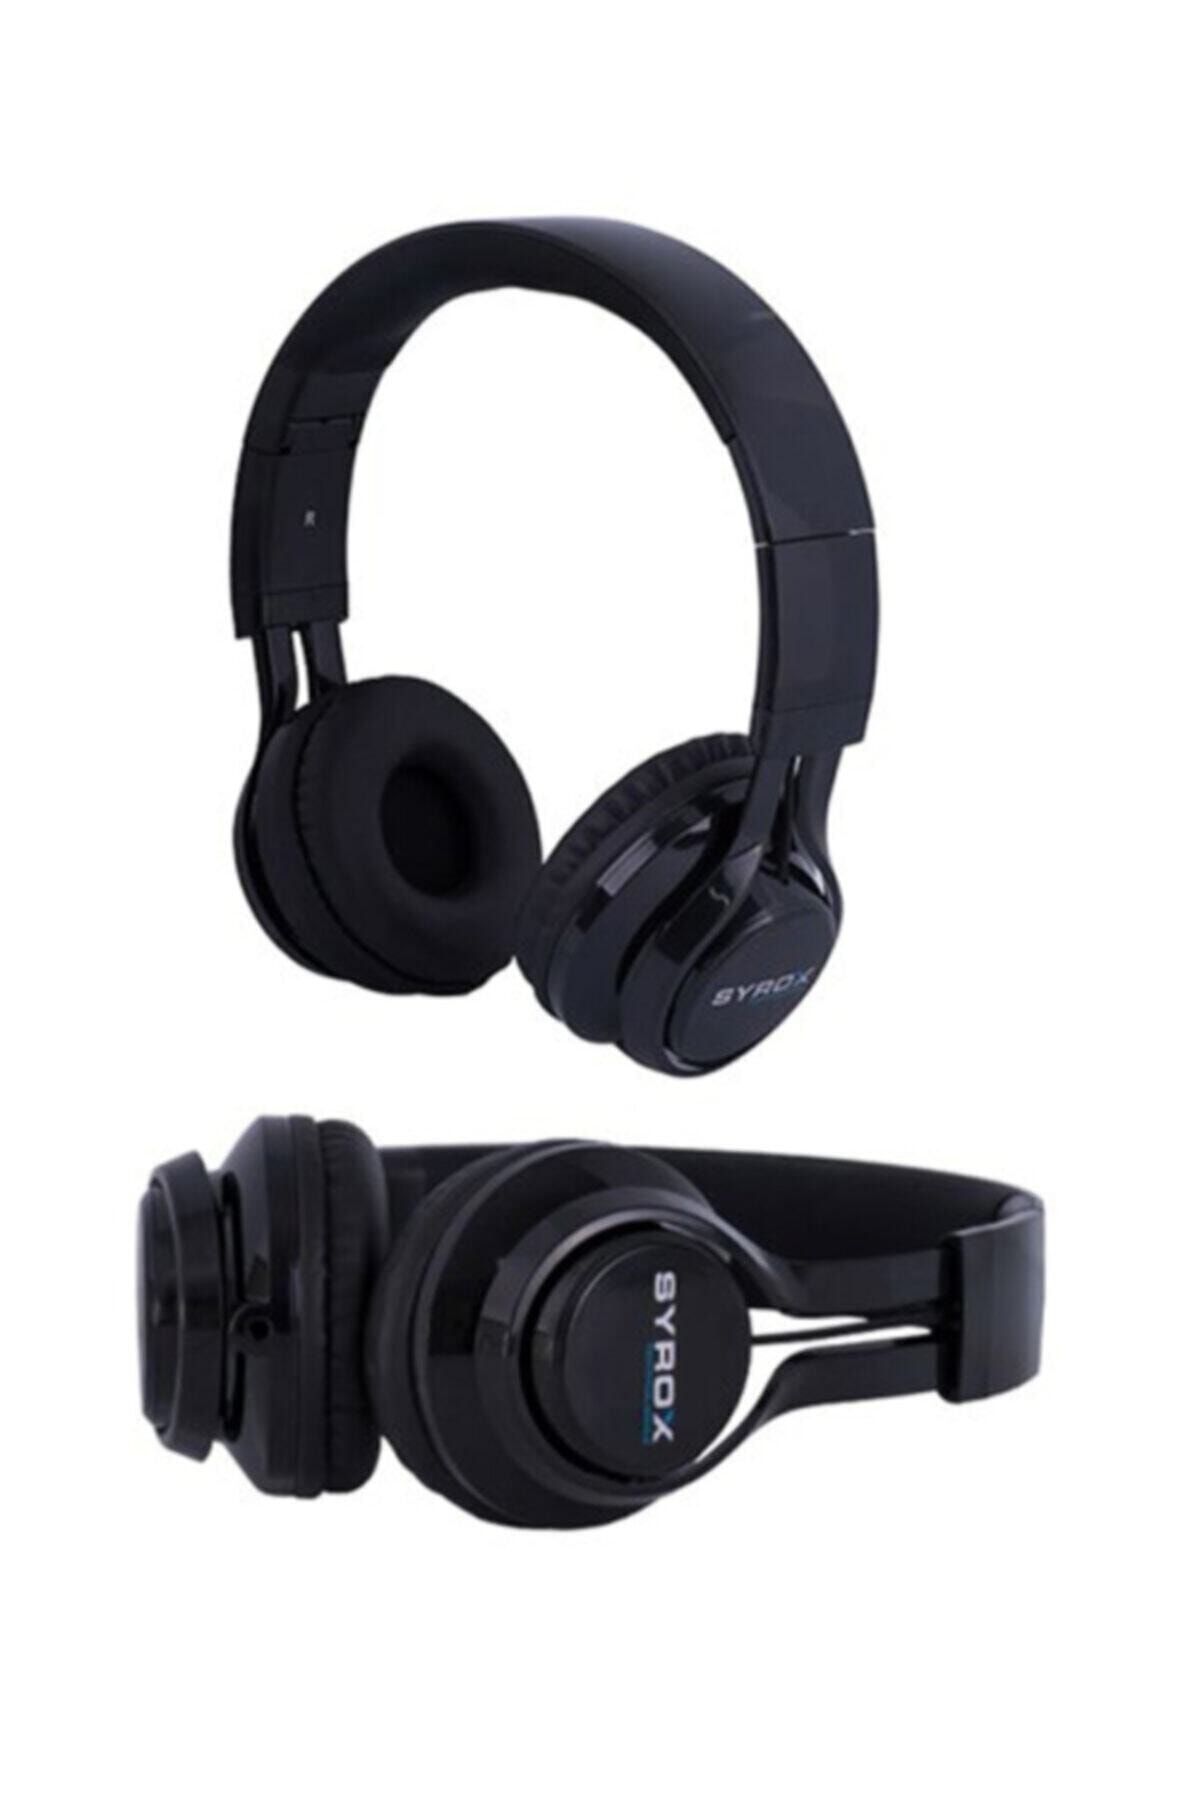 Syrox K11 Mikrofonlu Stereo Kablolu Extra Bass Kulaklık - Siyah